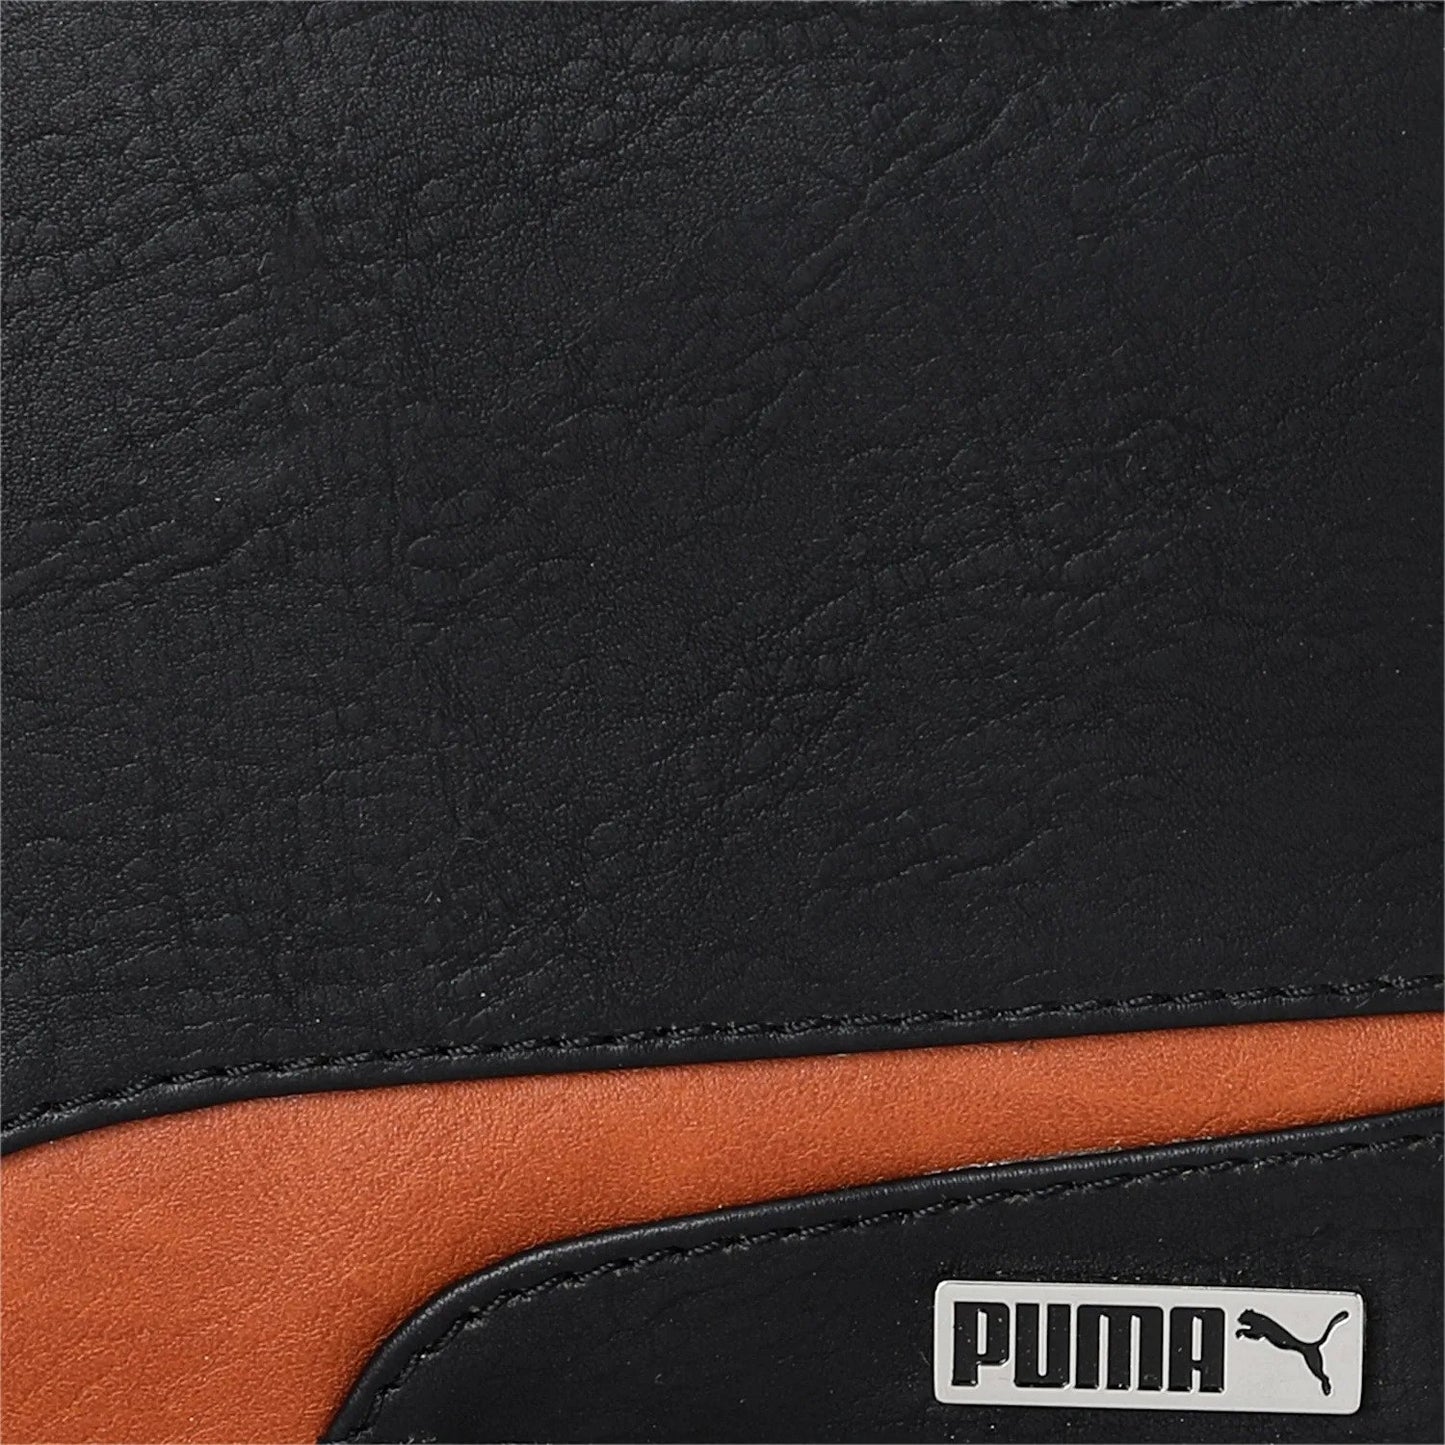 PUMA Stylized Unisex Wallet-079310 02